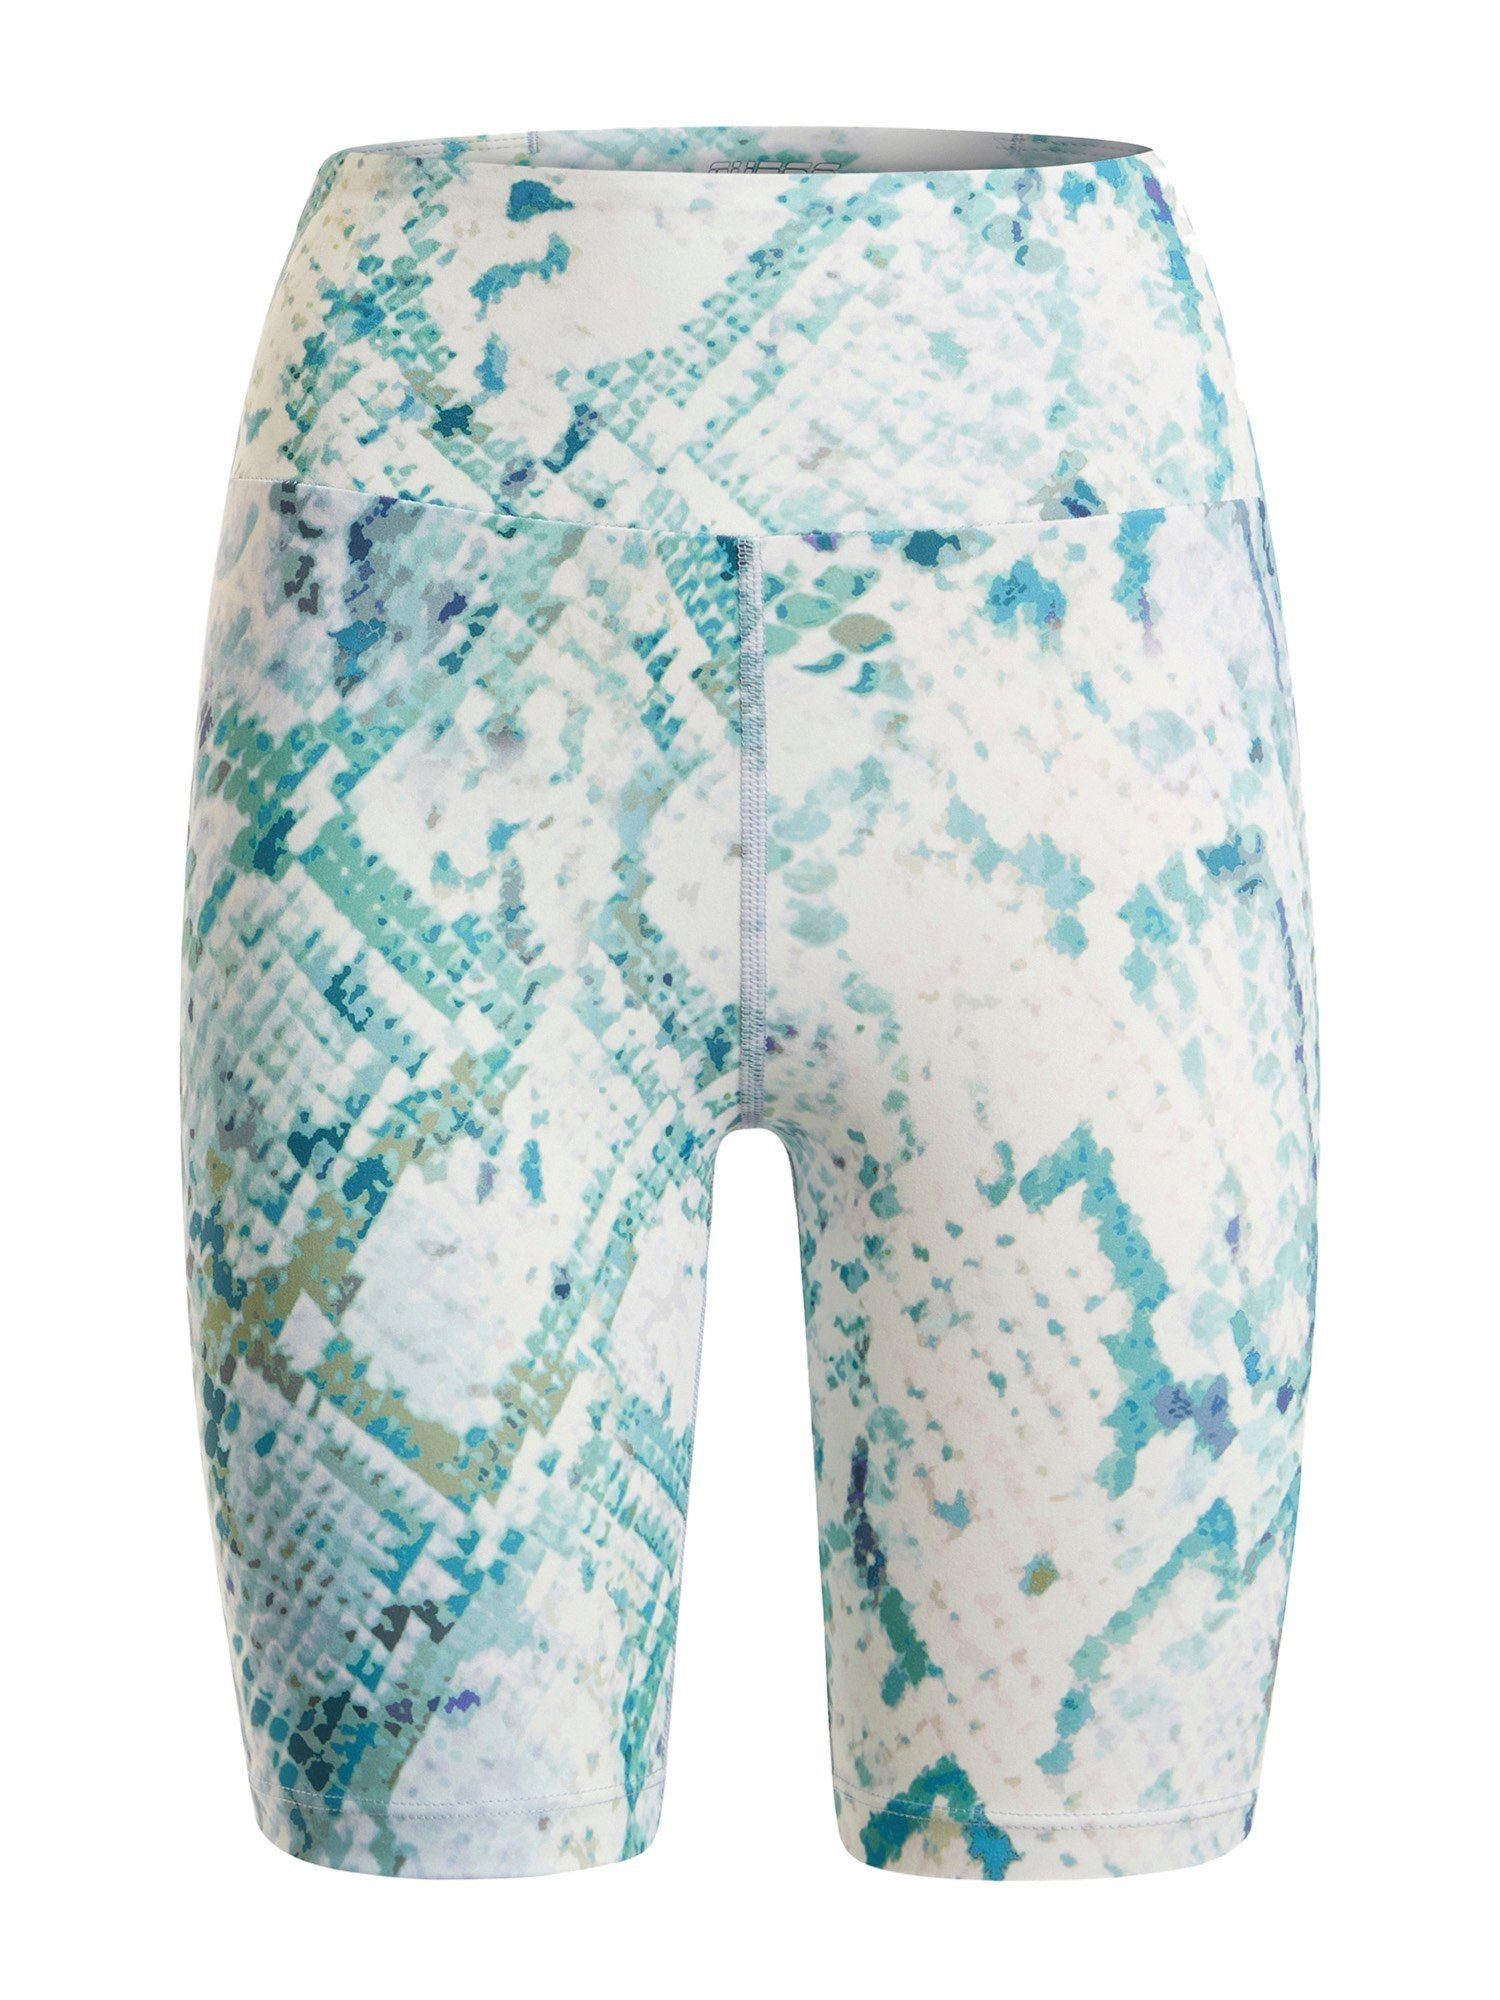 Guess Collection Shorts - Radlershorts - Sport Shorts - Enge Shorts - COLLYN BIKER